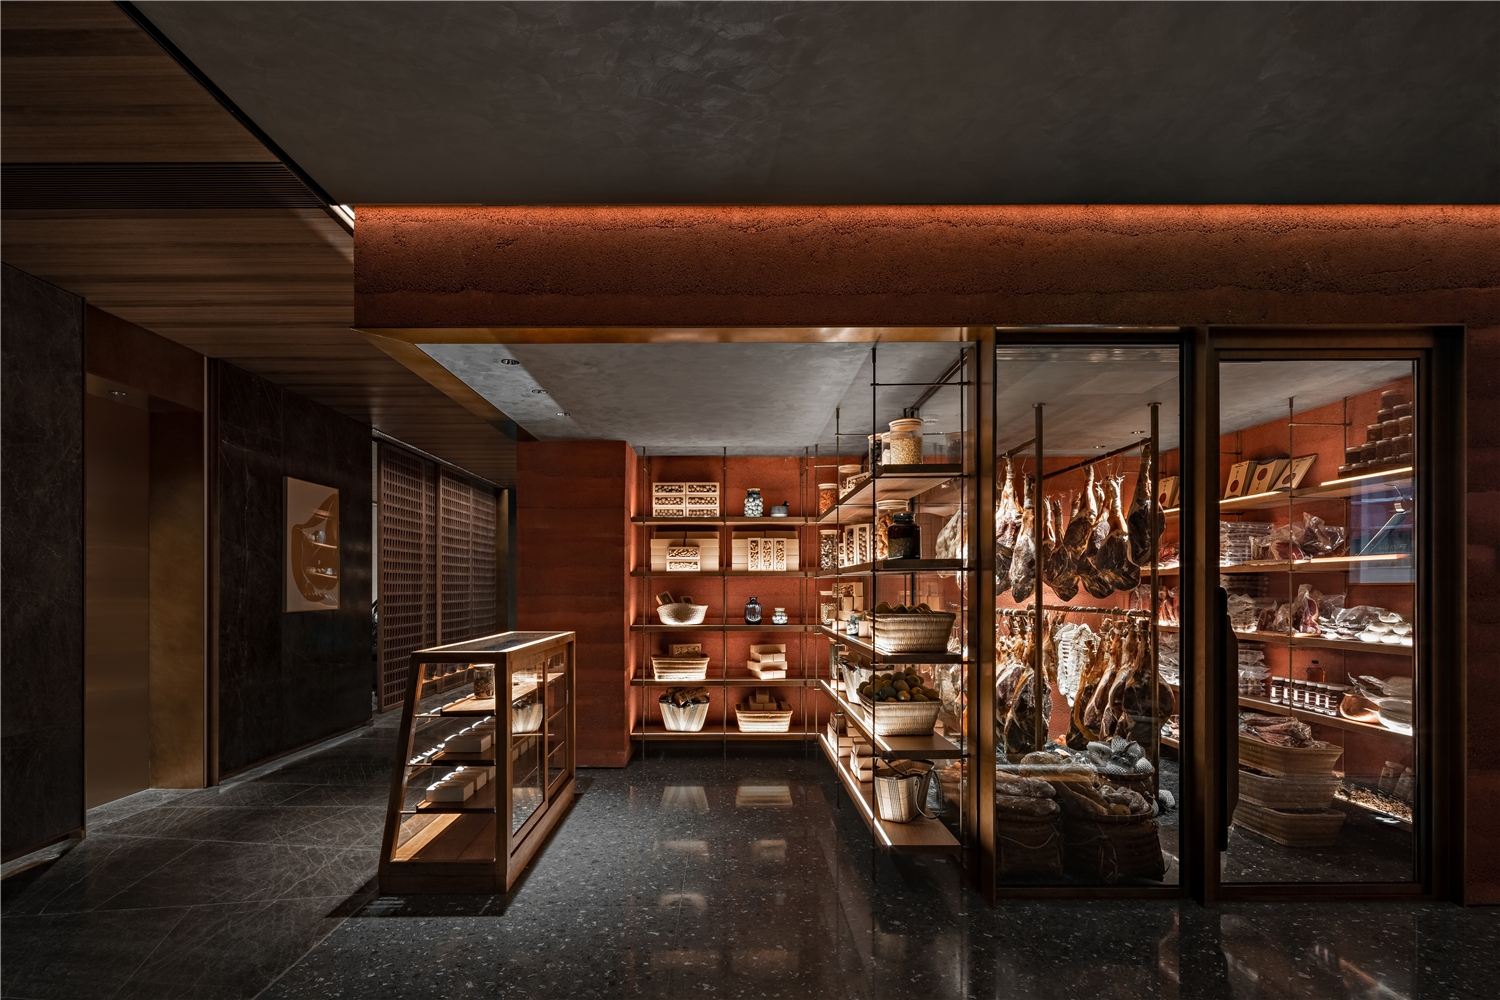 HONG 0871云南菜餐厅|ART-Arrakis | 建筑室内设计的创新与灵感